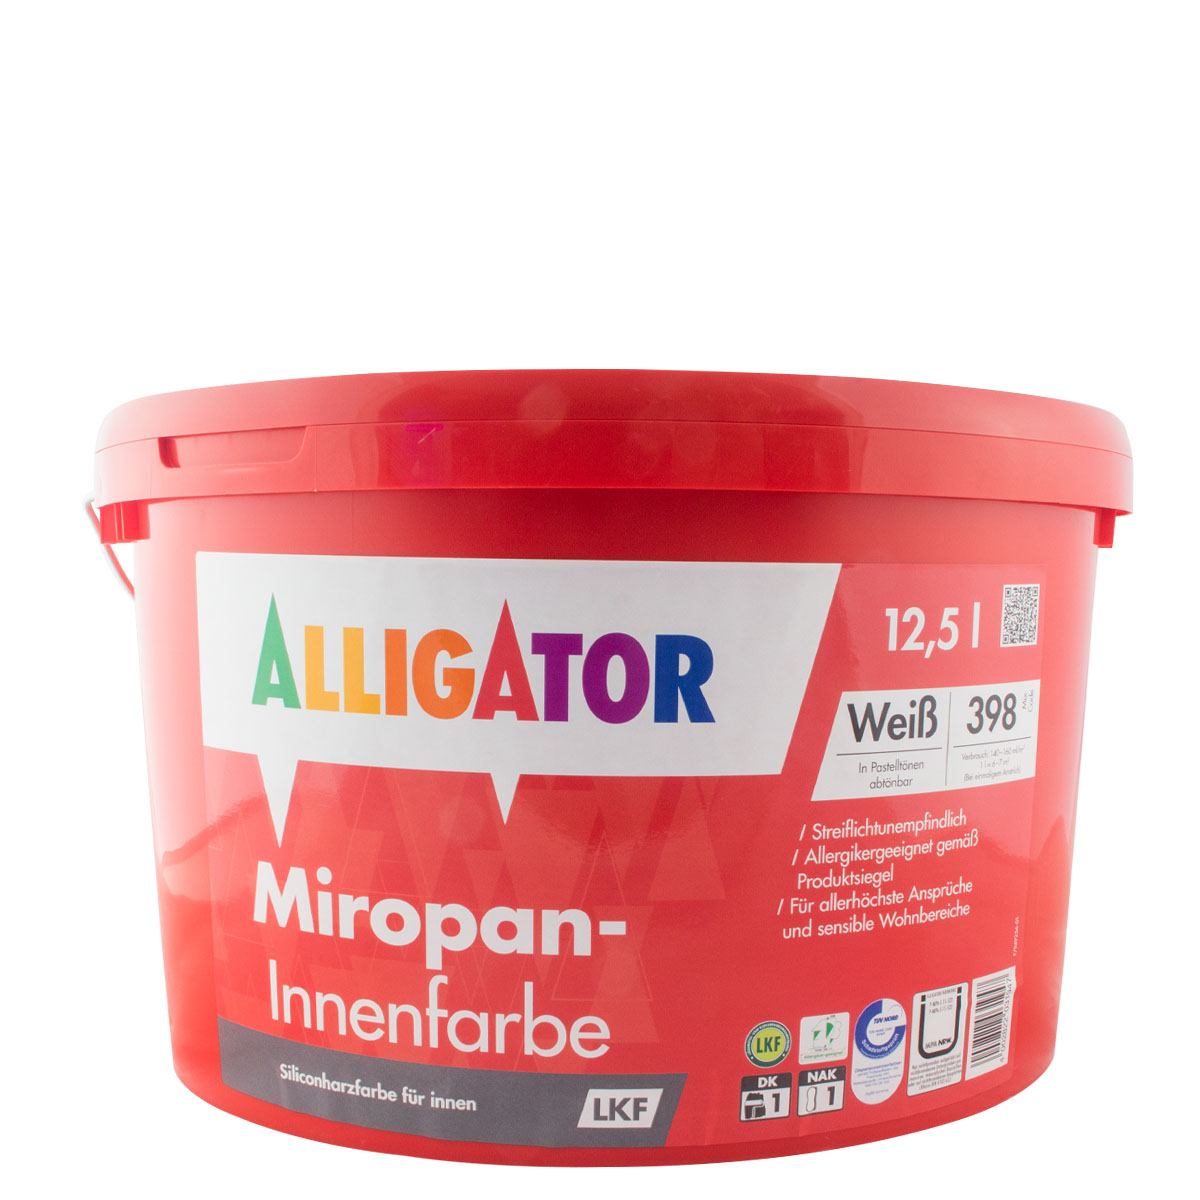 alligator_miropan-Innenfarbe_12,5L_gross